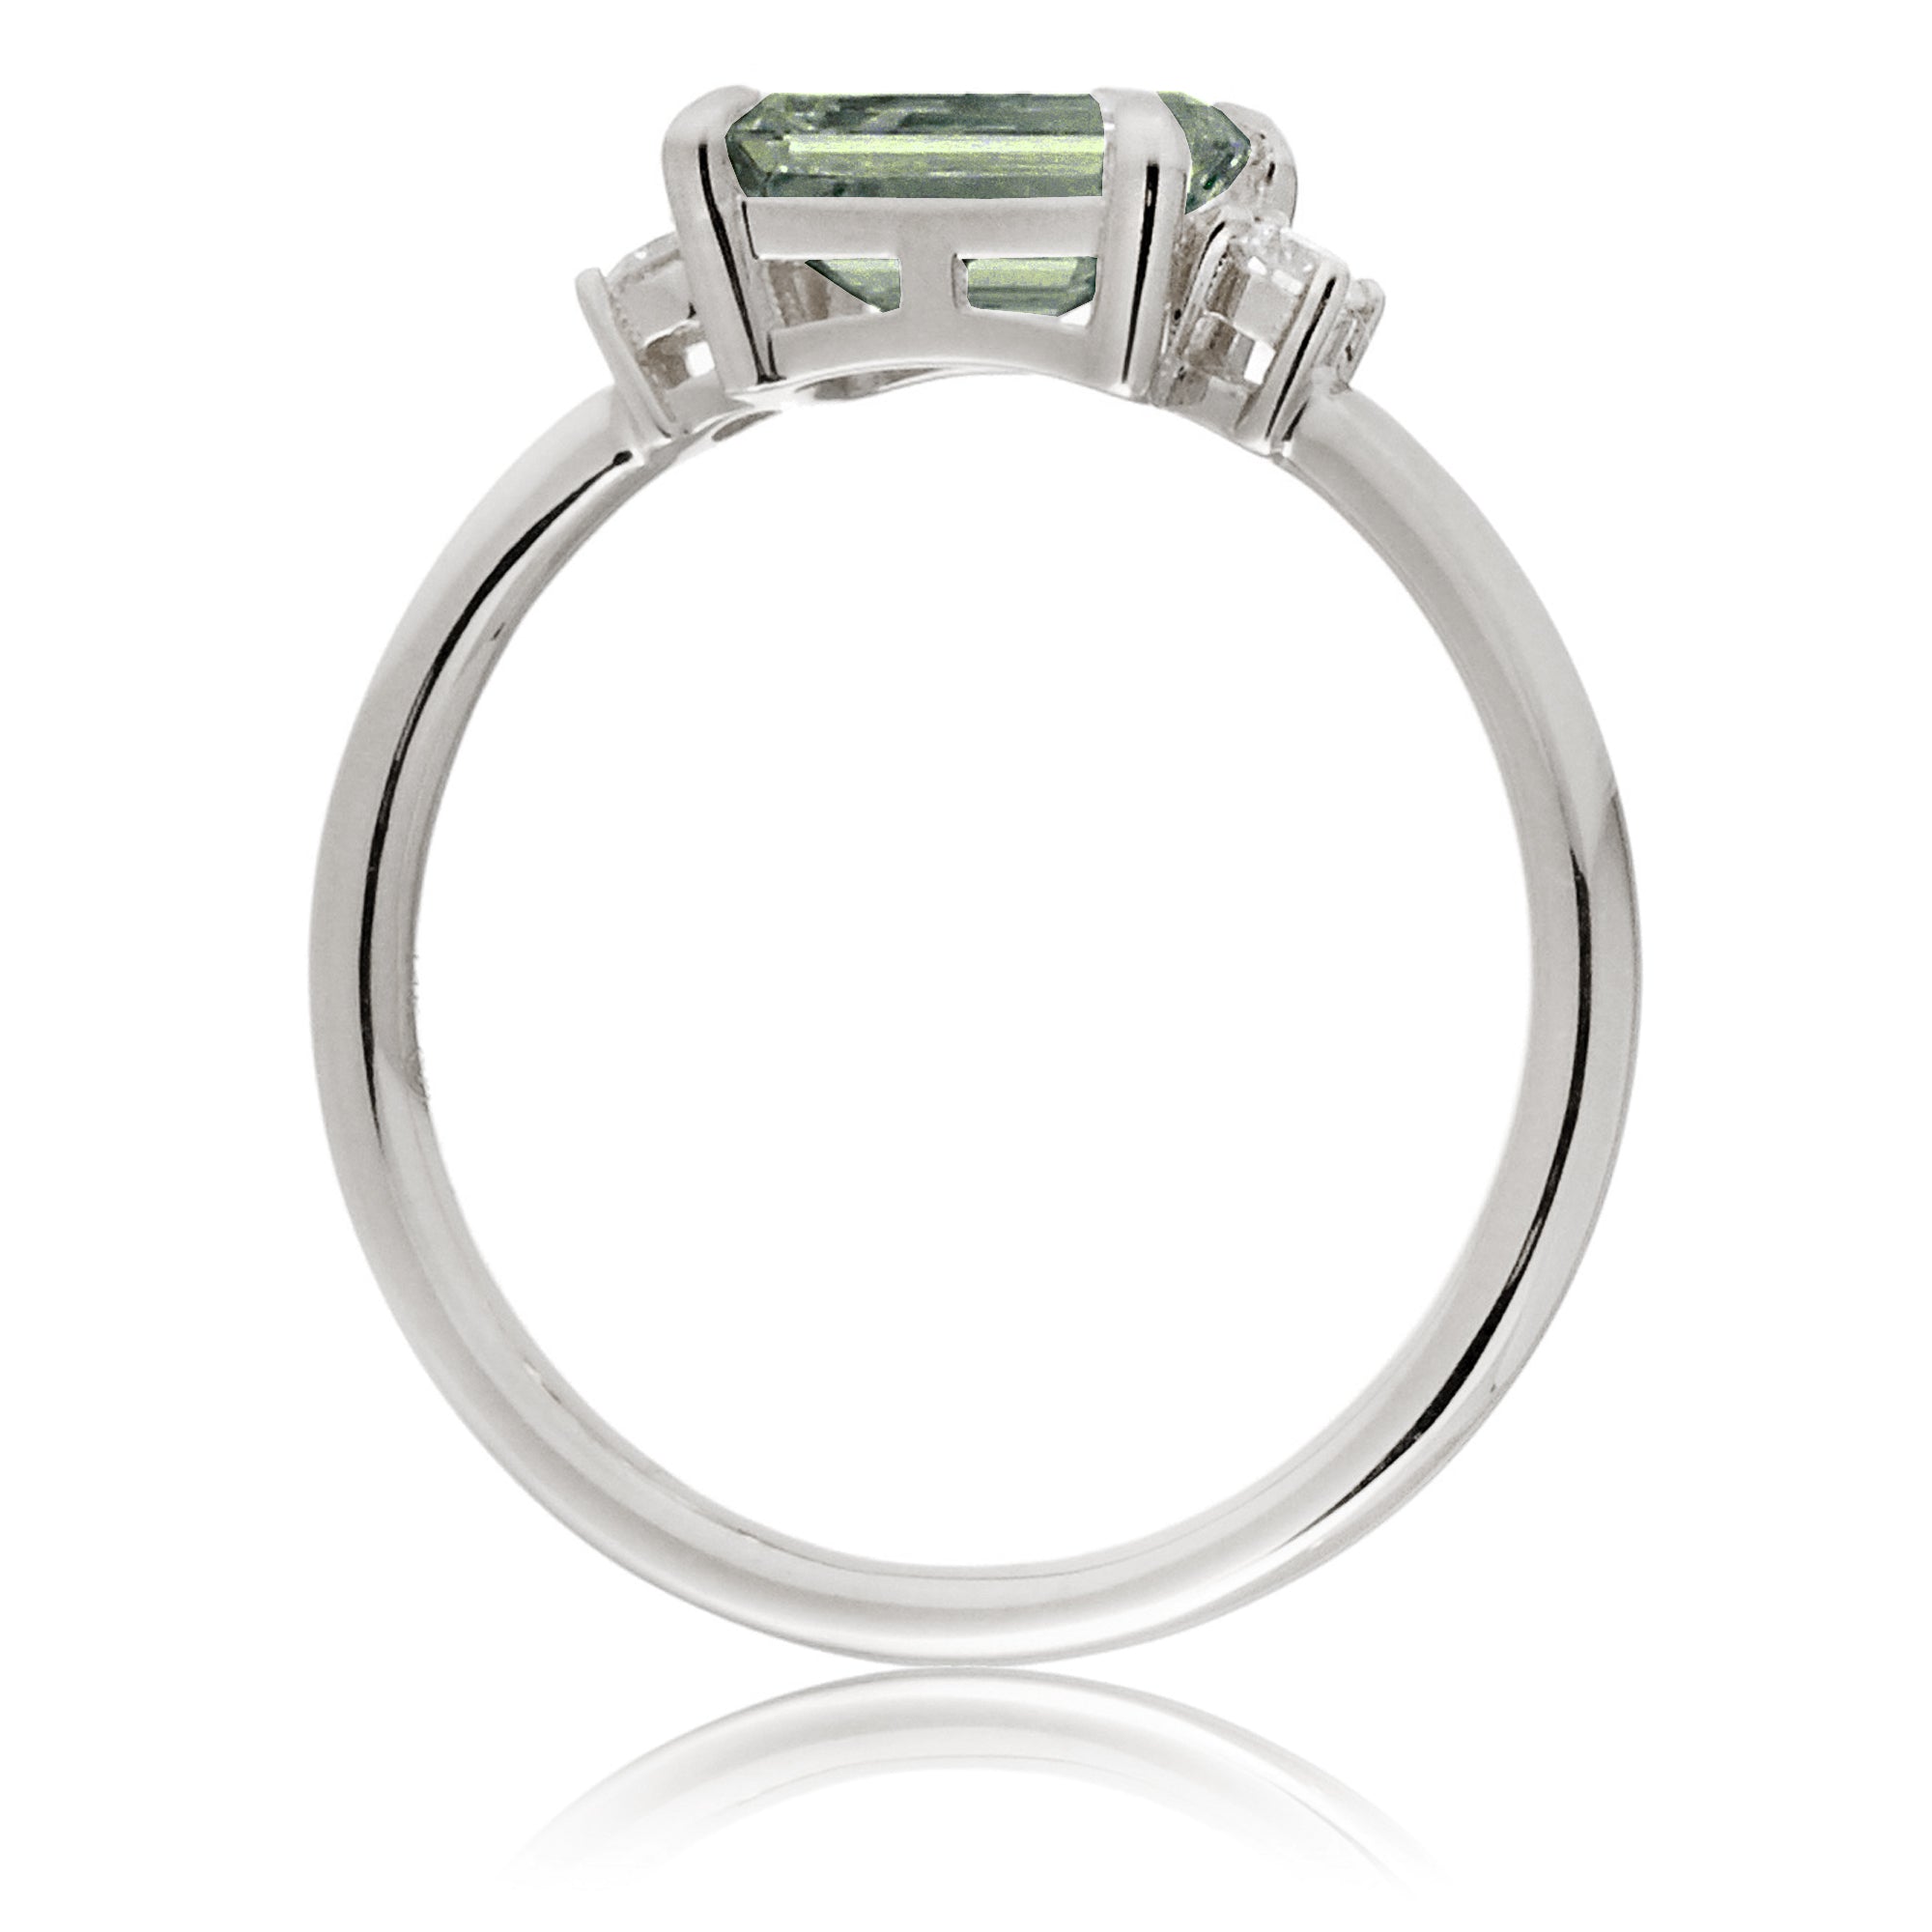 Emerald cut green sapphire three stone ring the Lena white gold